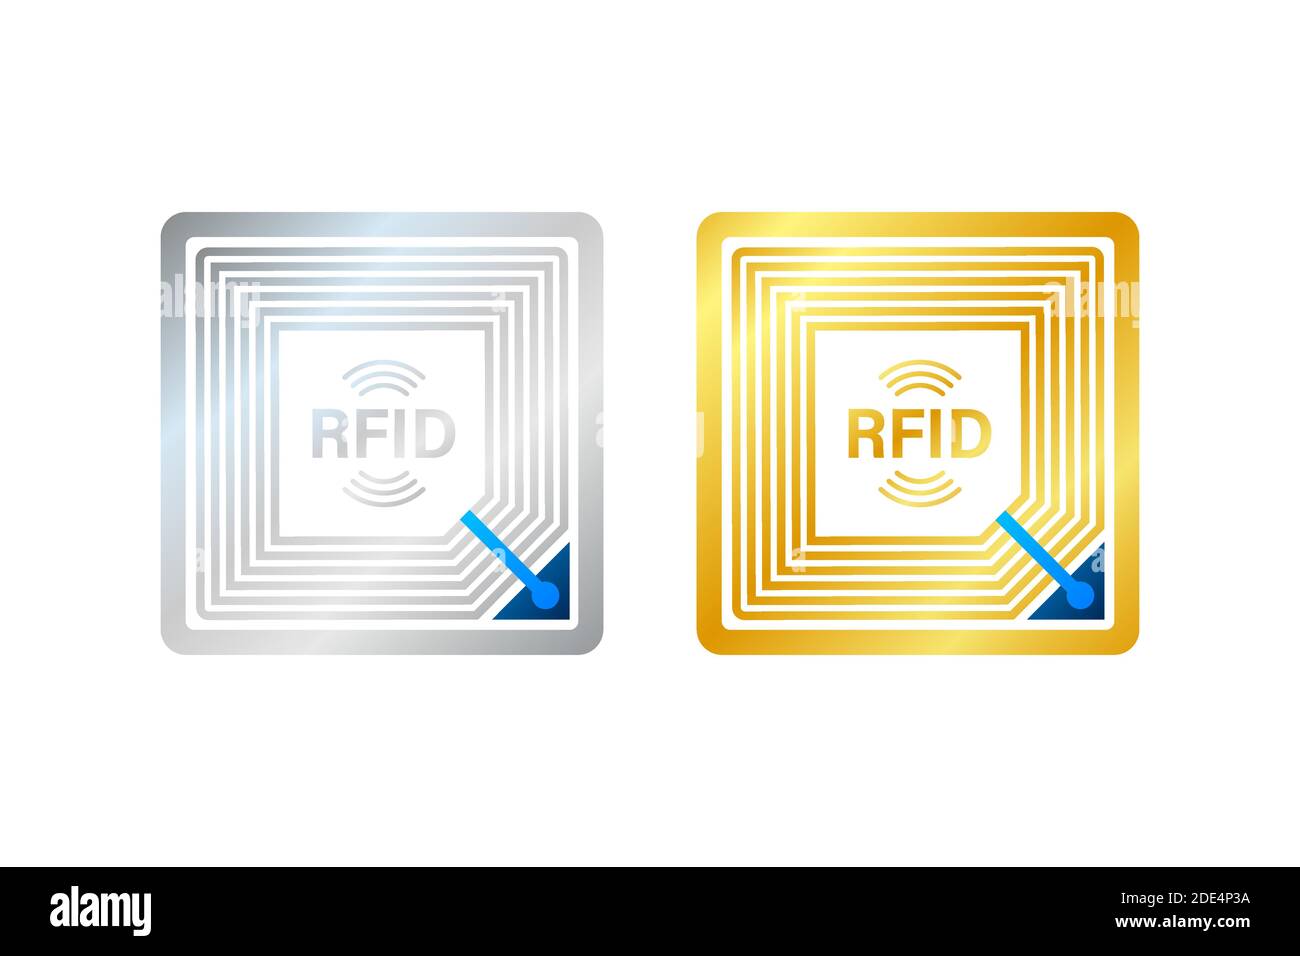 RFID Radio Frequency IDentification. Technology concept. Digital technology. Vector stock illustration. Stock Vector